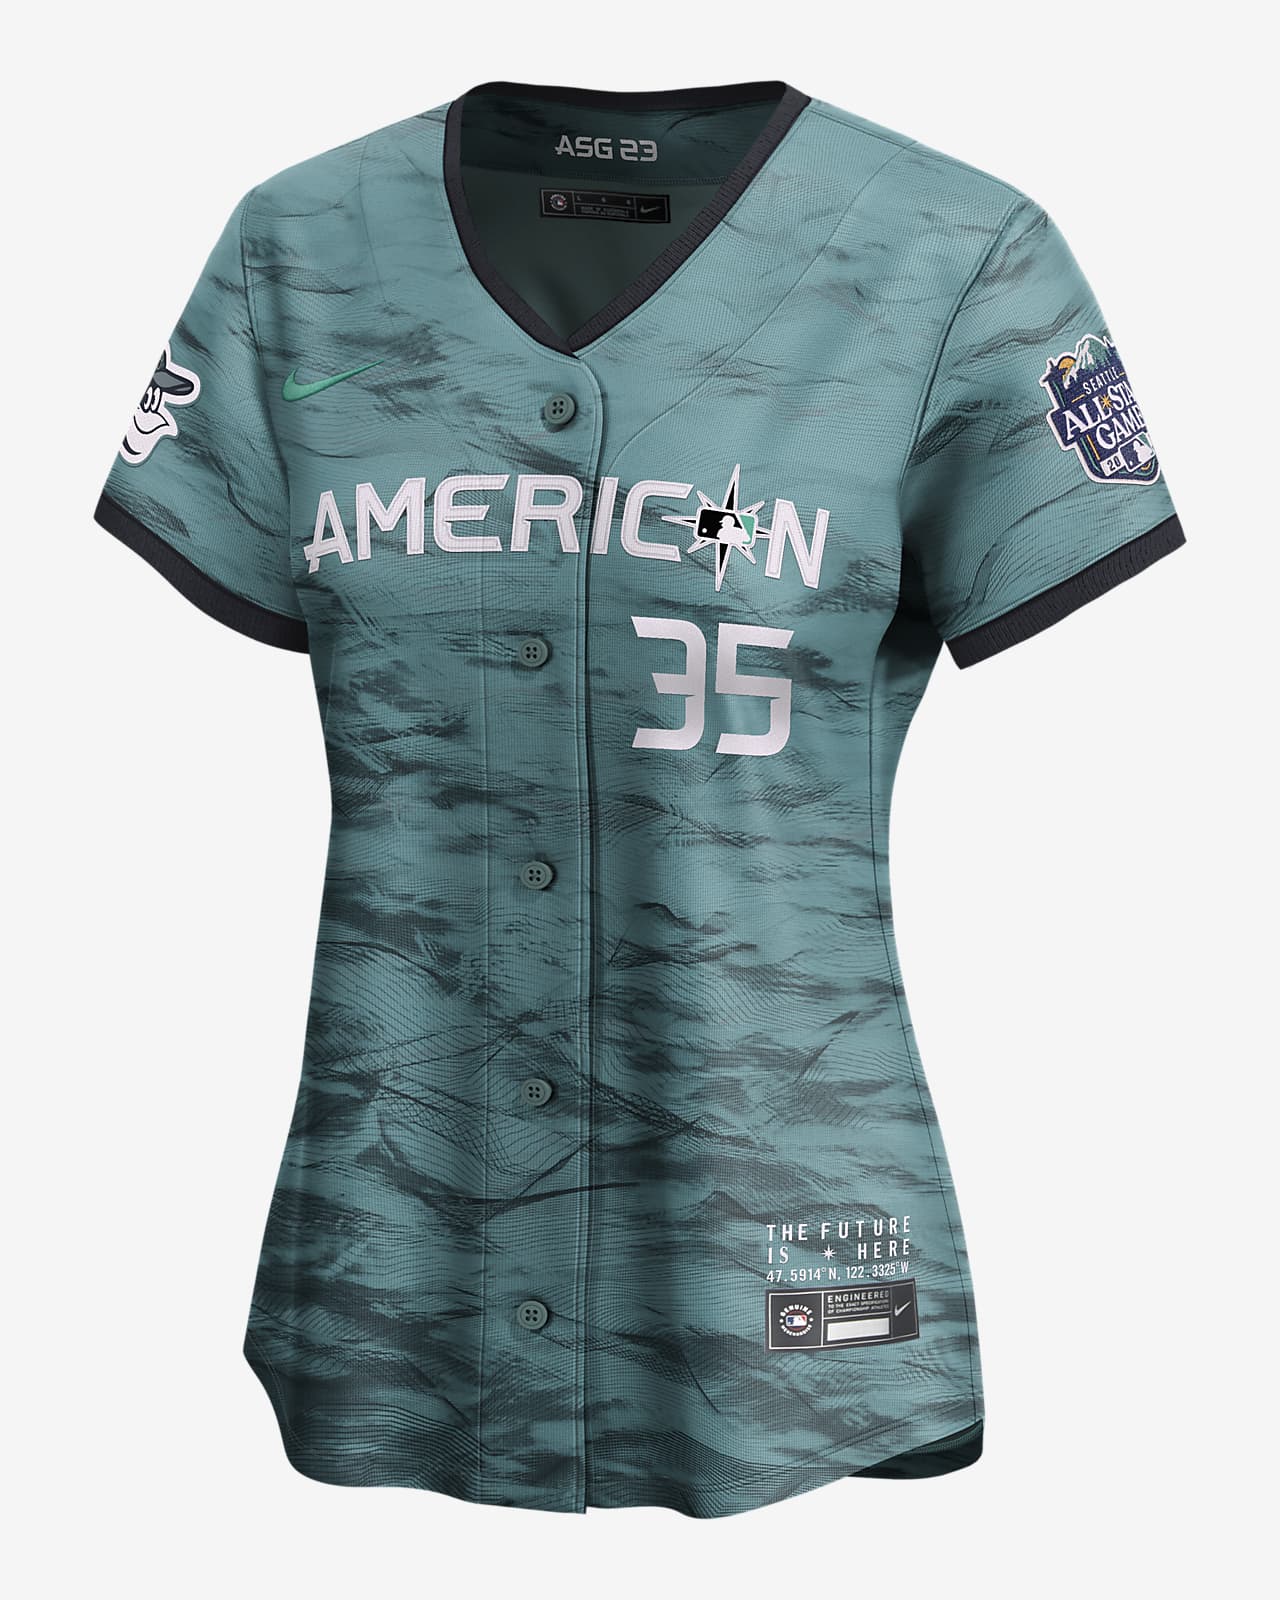 Adley Rutschman American League 2023 All-Star Game Women's Nike